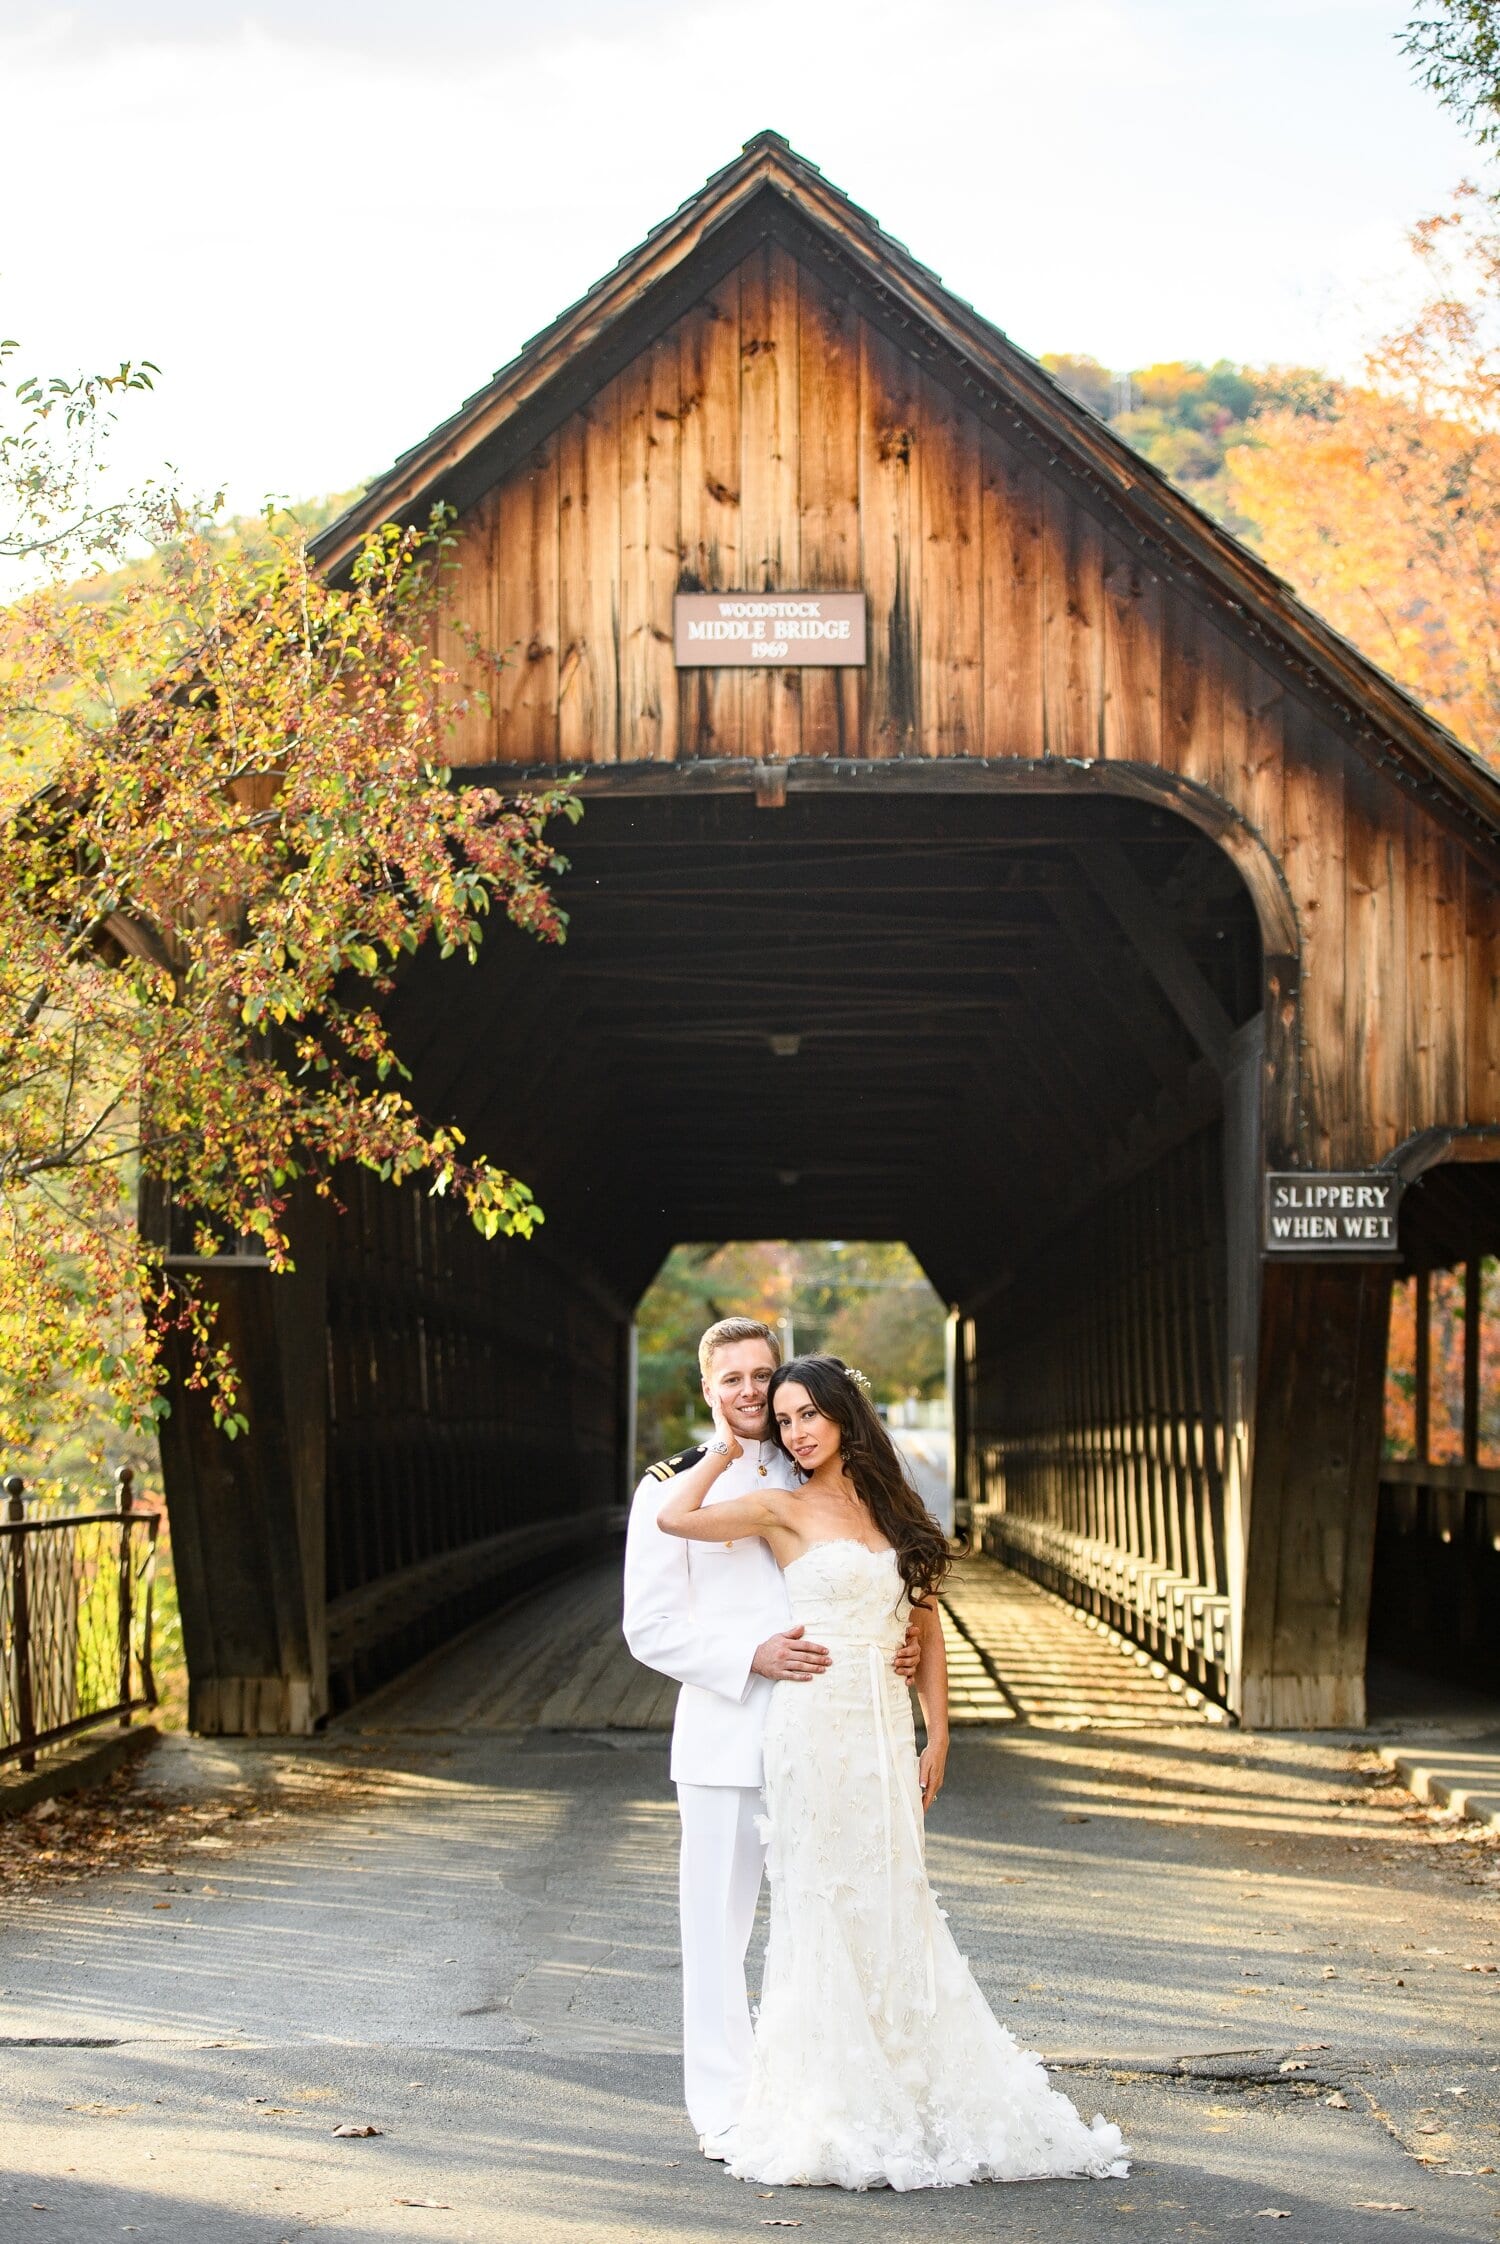 Romantic Woodstock Inn Winter Wedding - Vermont Wedding Photographers